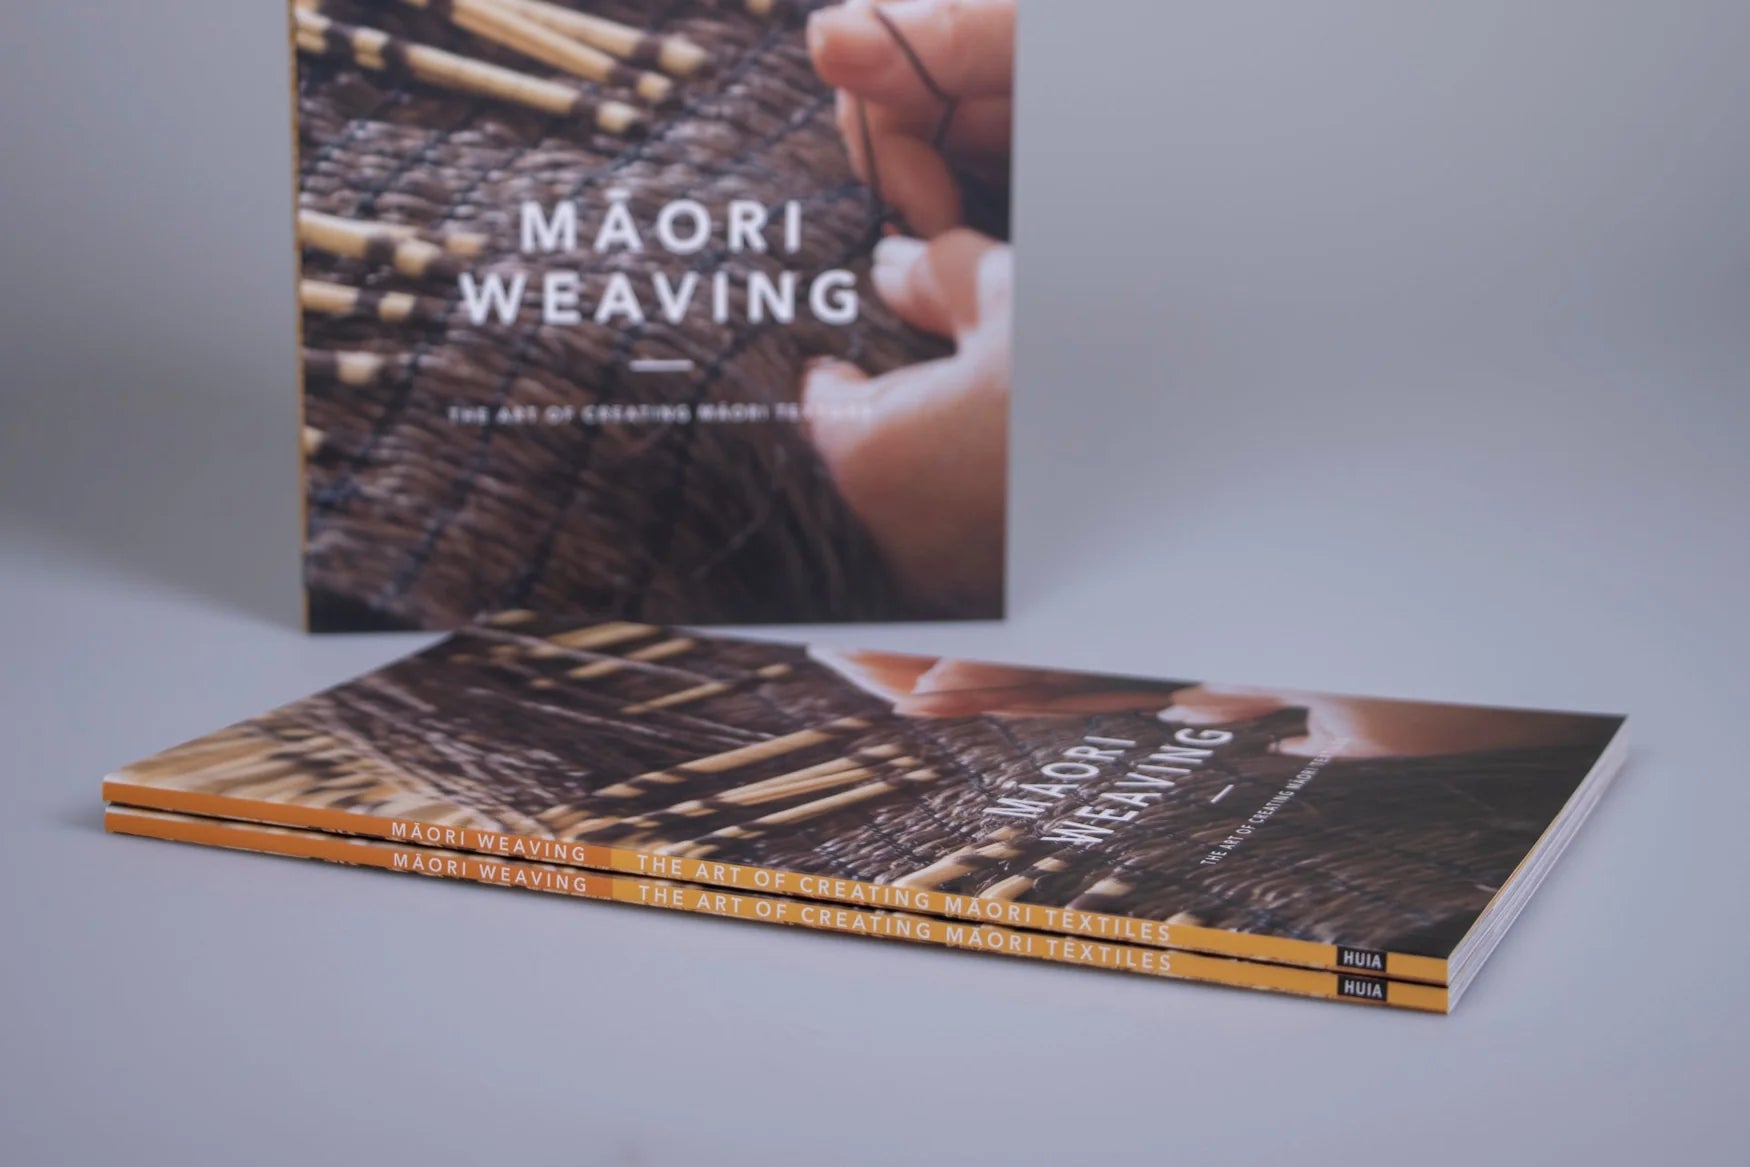 Māori Weaving: The Art of Creating Māori Textiles from Ngā Kete Iho & Huia Publishers